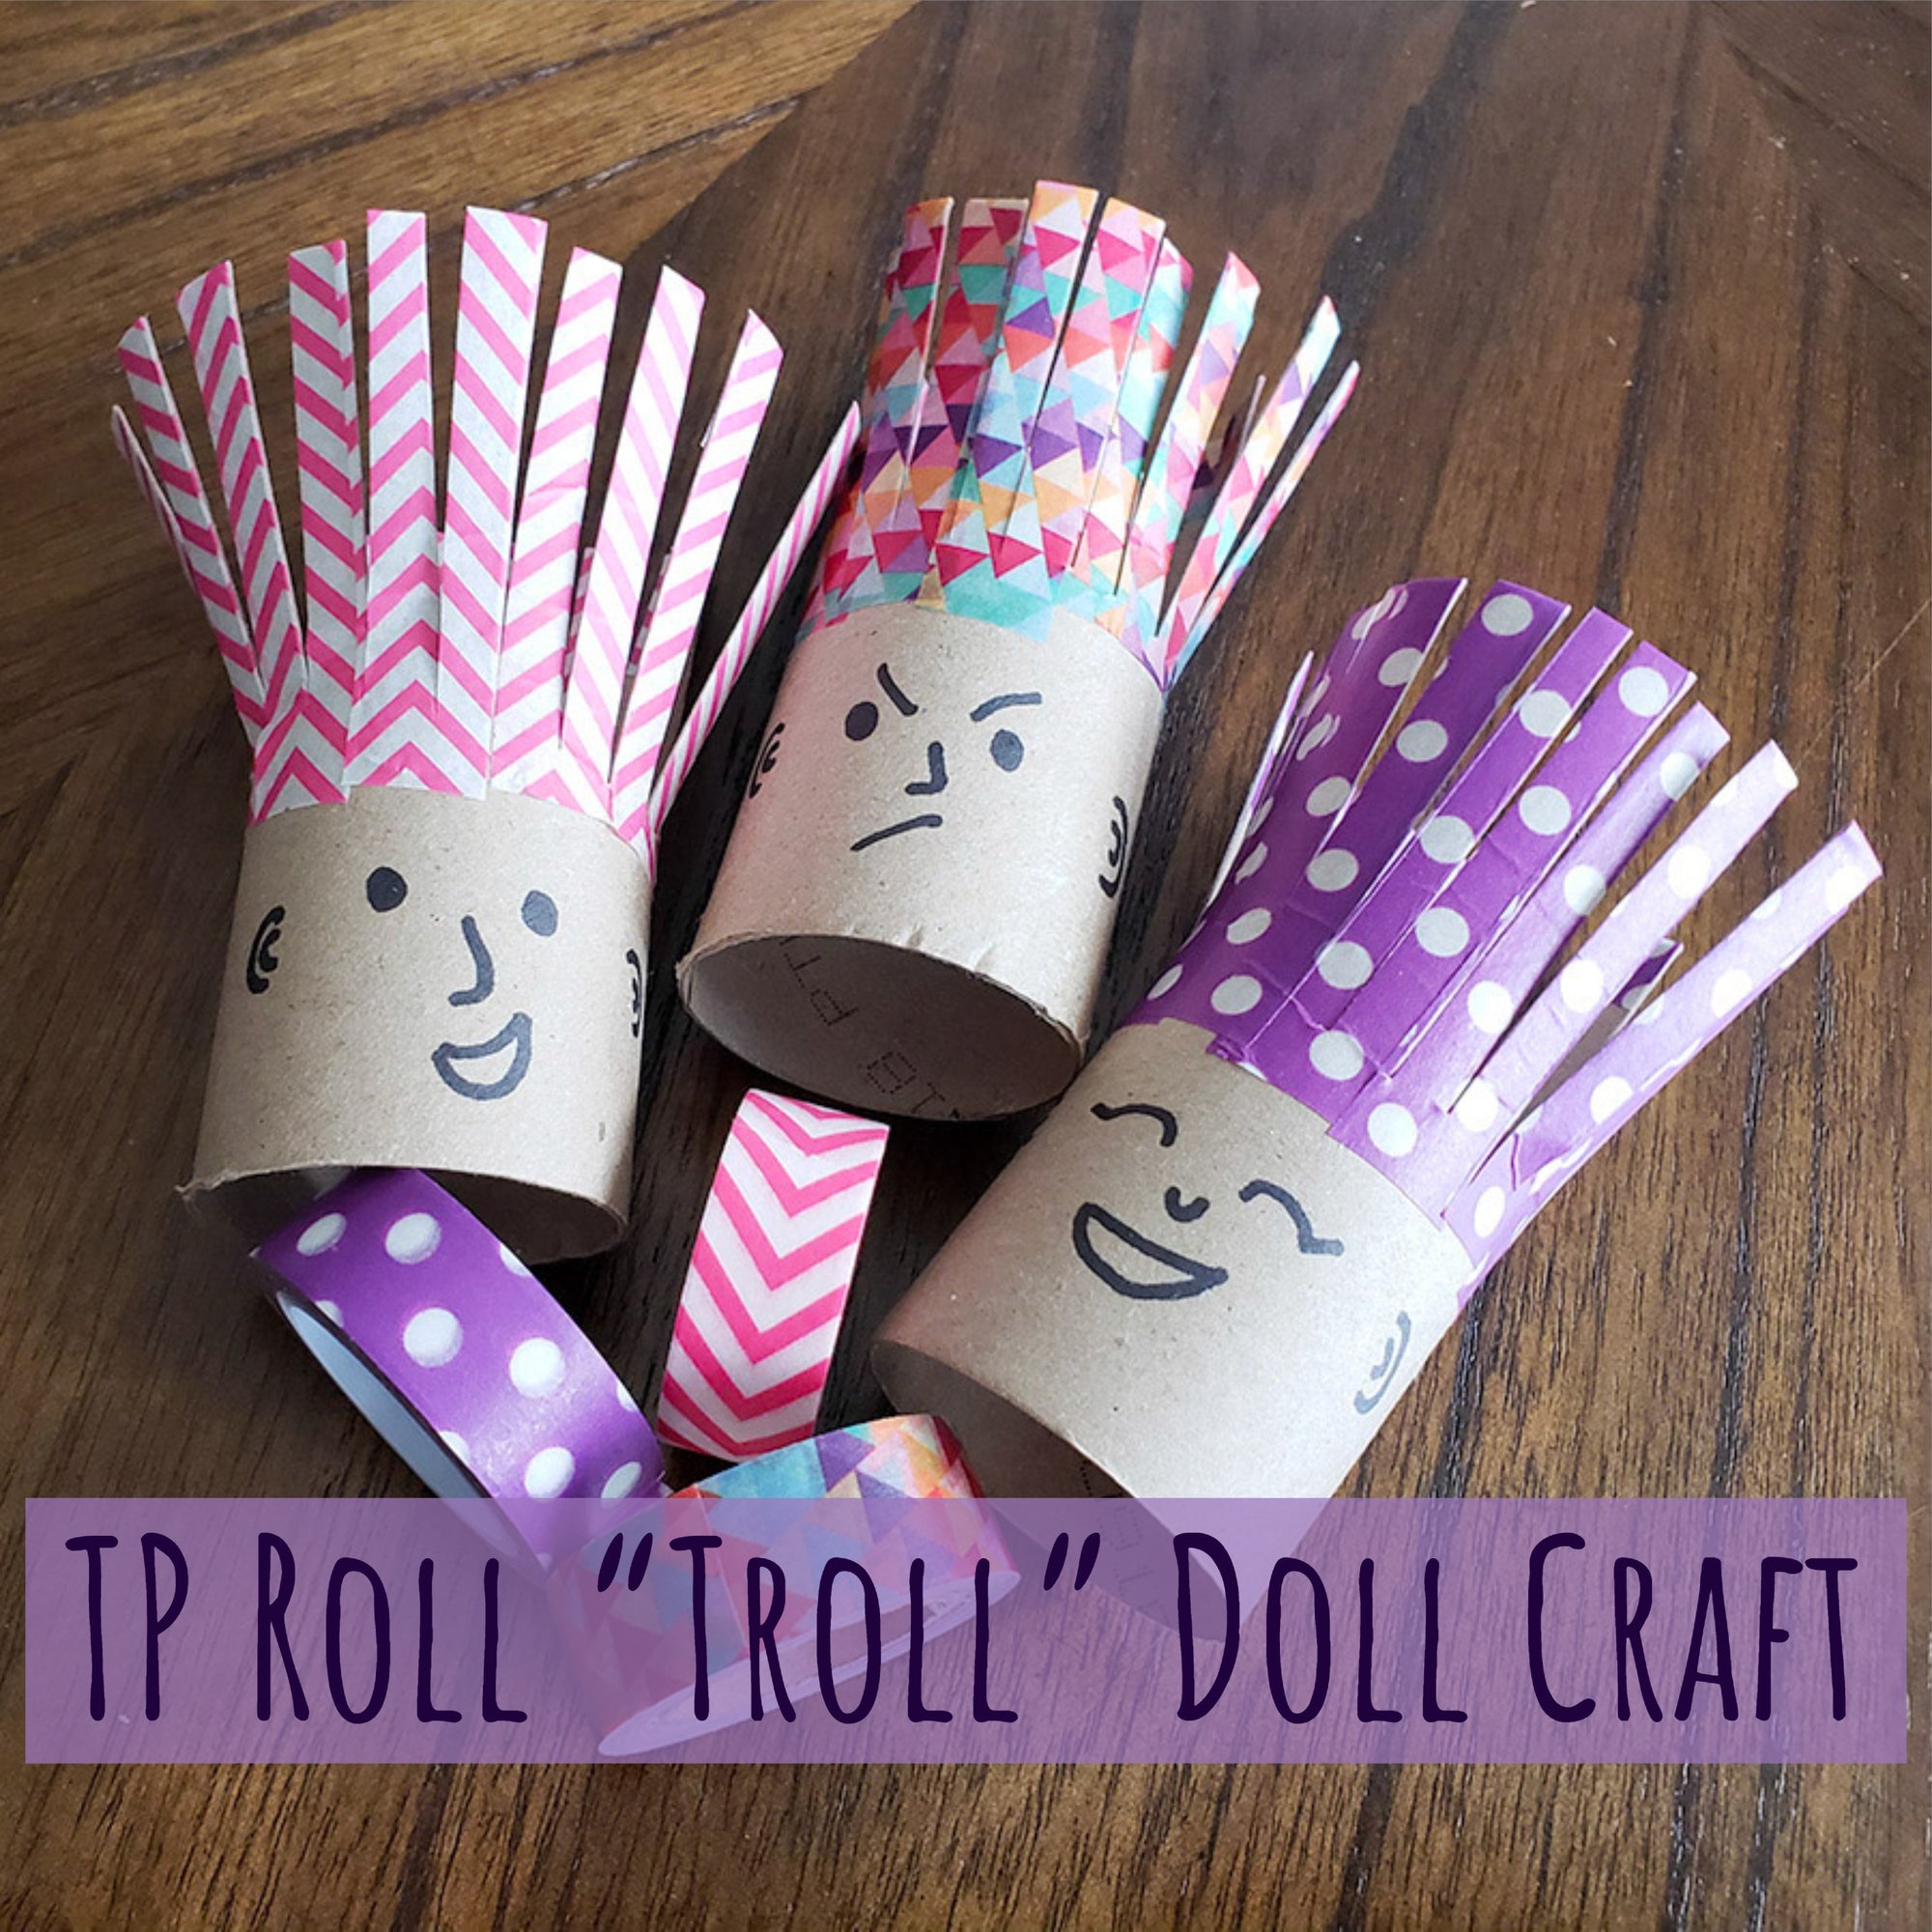 TP Roll “Troll” Doll Washi Tape Craft